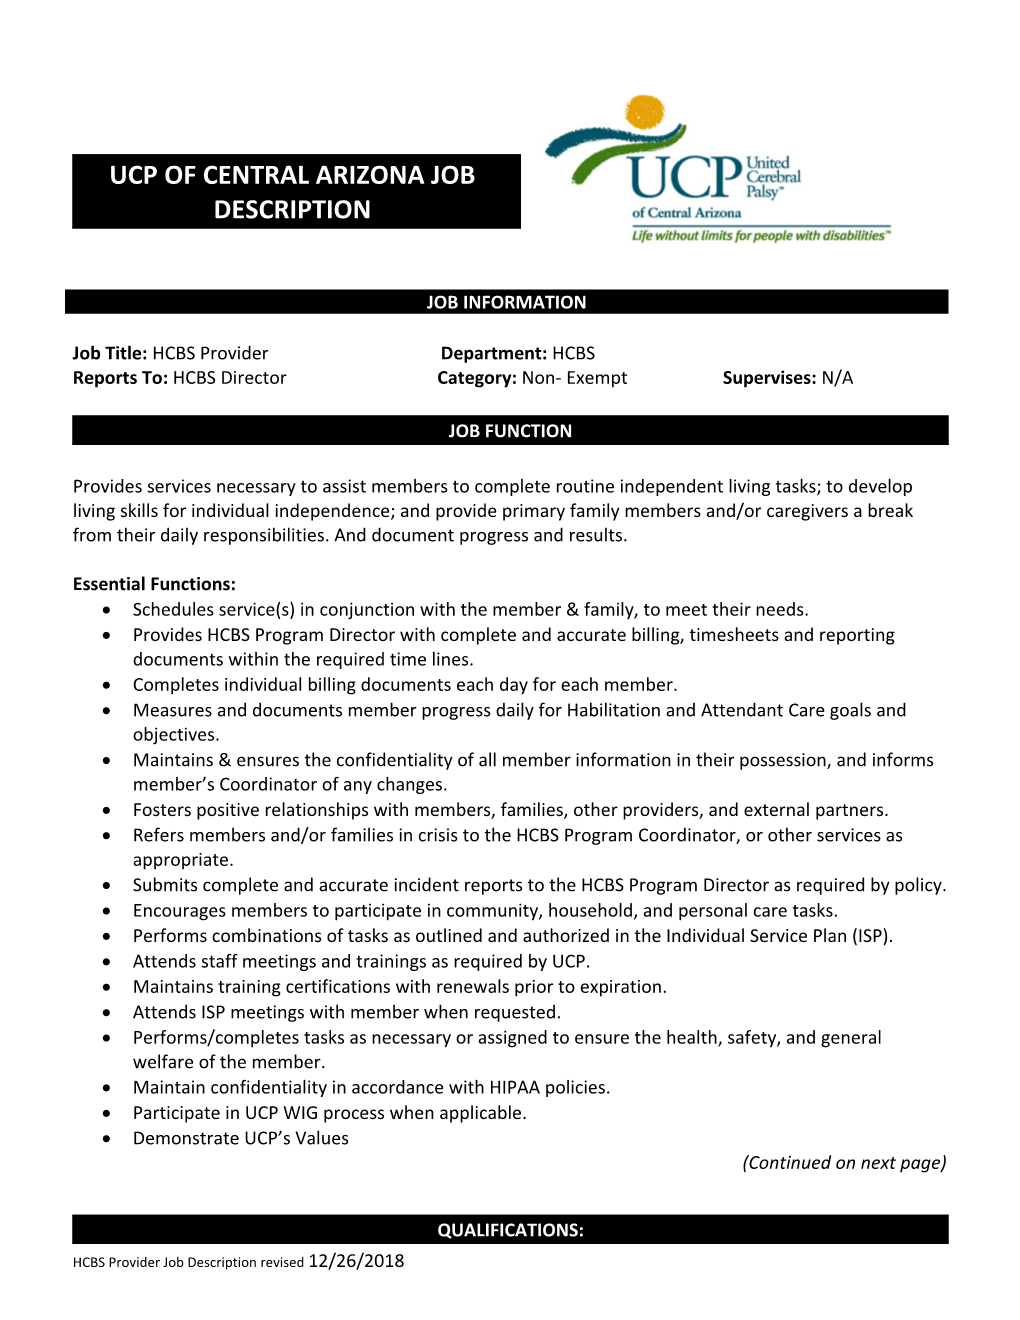 UCP of Central Arizona Job Description